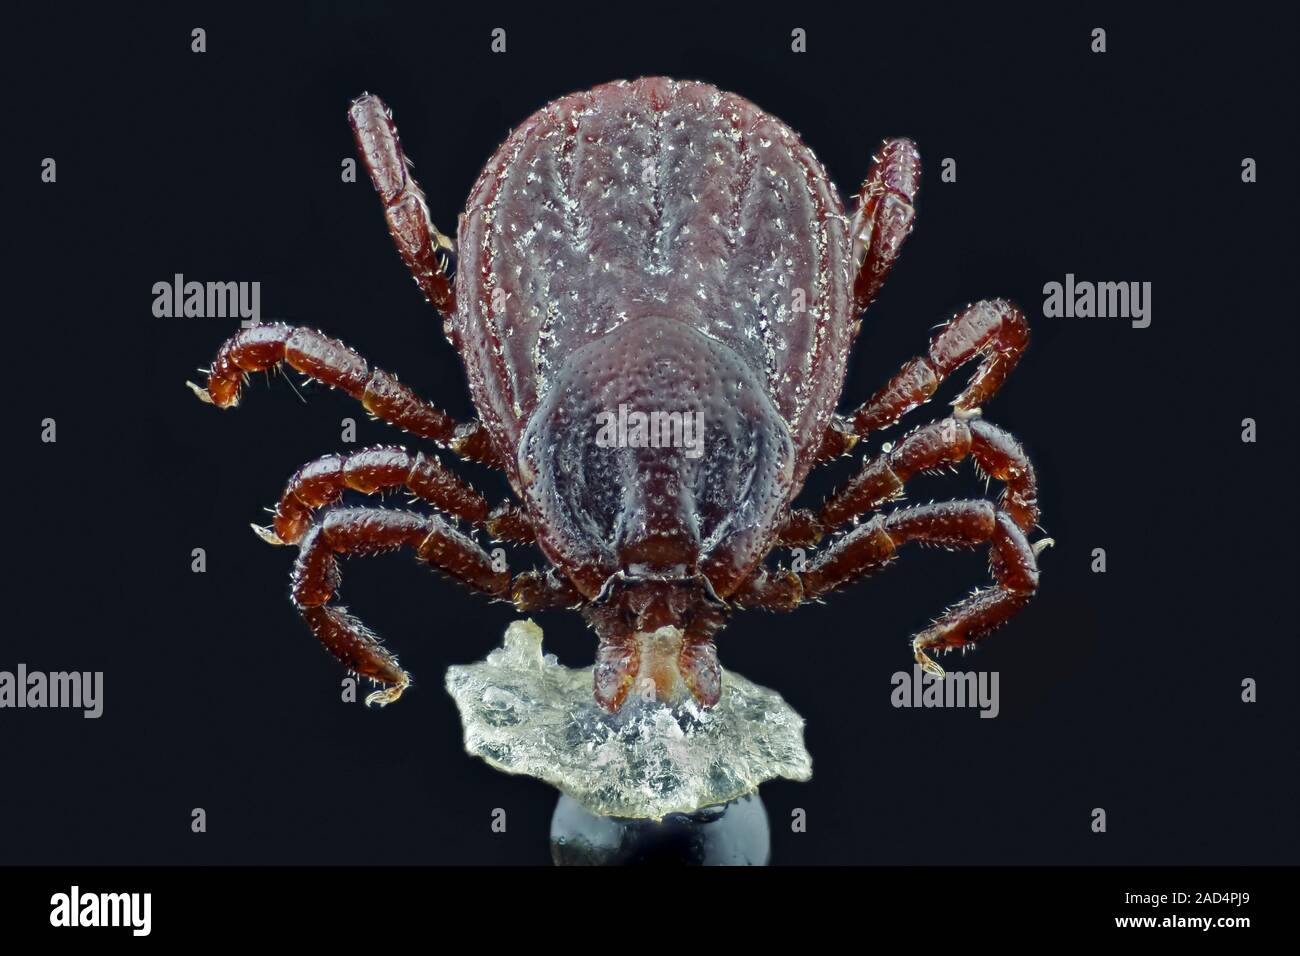 Tick. Macro photograph of a tick (superfamily Ixodoidea) on a piece of human skin (bottom centre). Ticks are parasitic arachnids that feed on blood. M Stock Photo